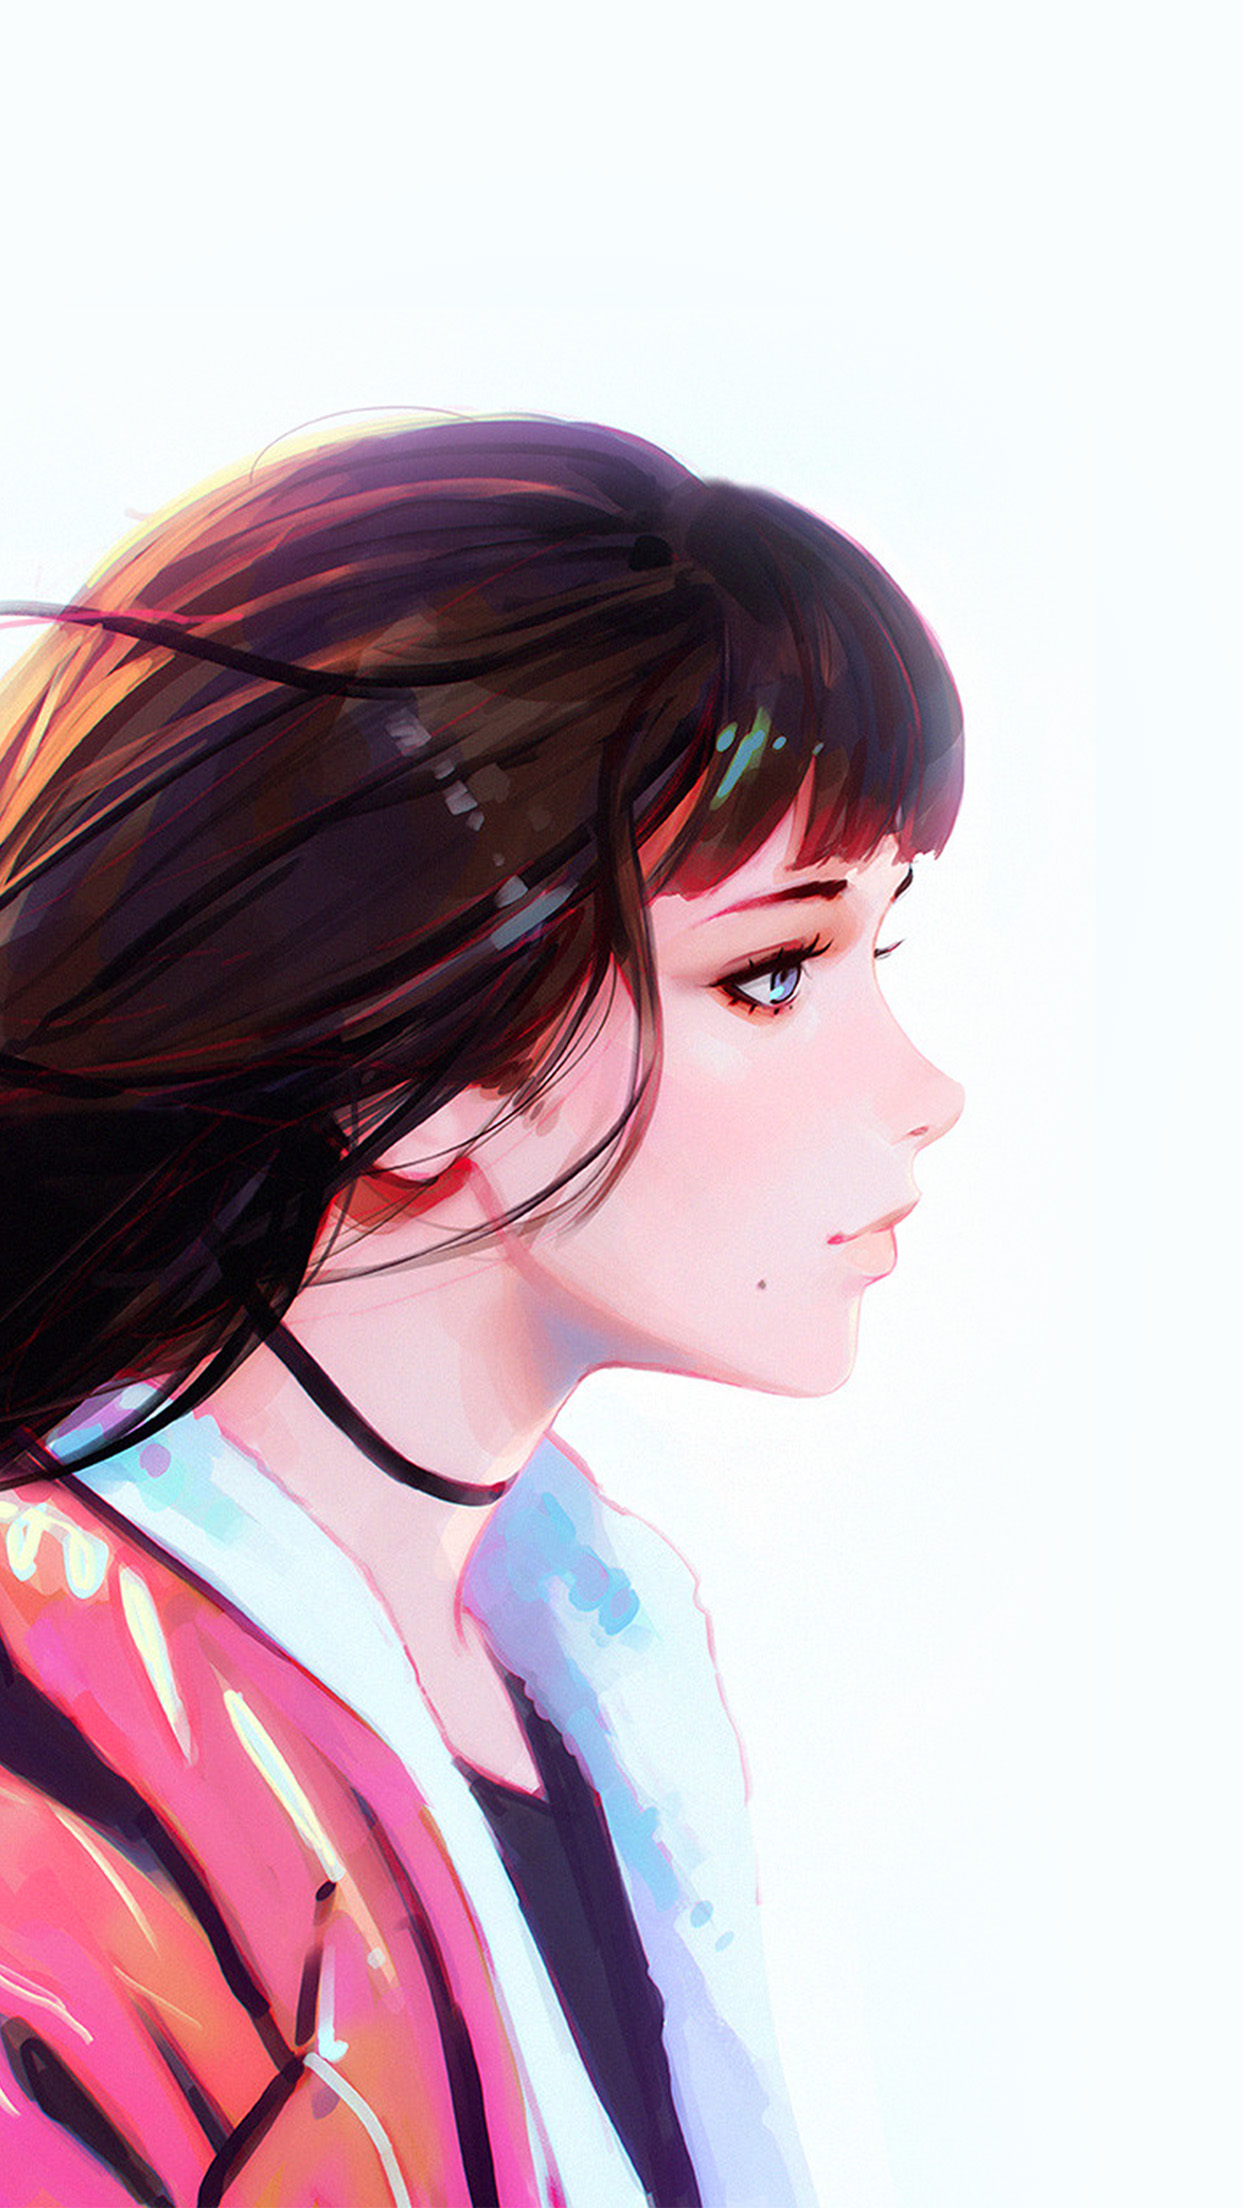 anime drawing wallpaper,hair,face,hairstyle,black hair,chin